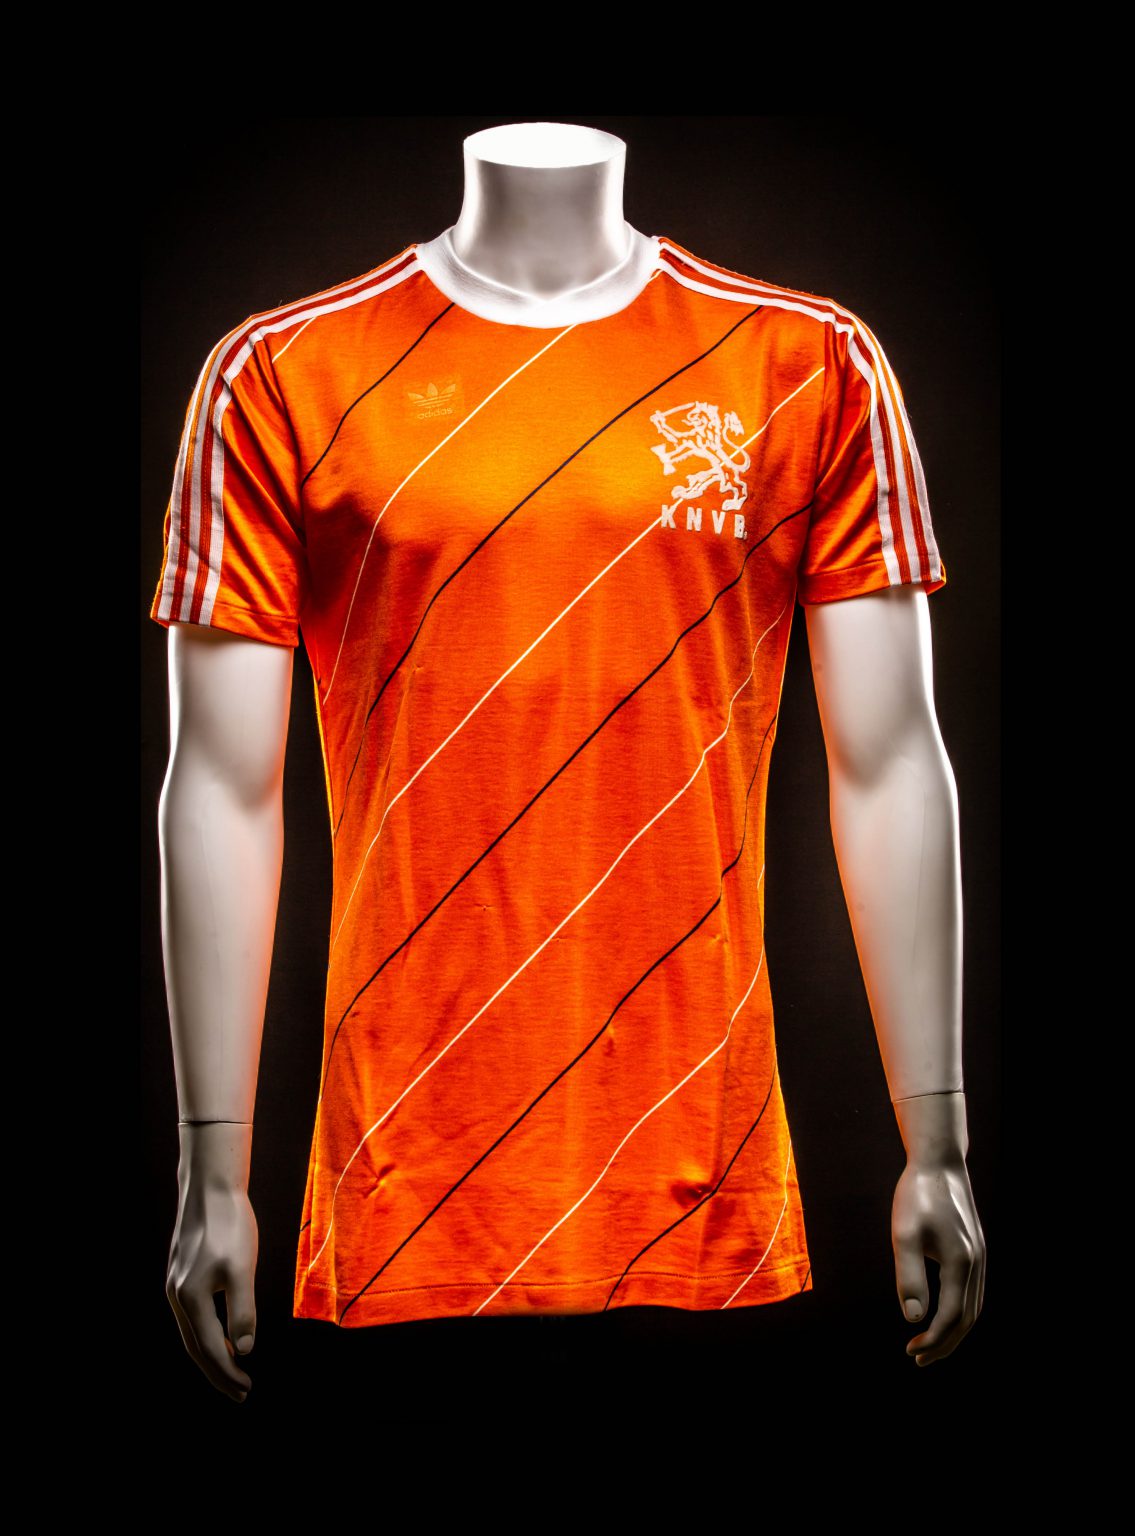 #6 Jong Oranje Martin Laamers